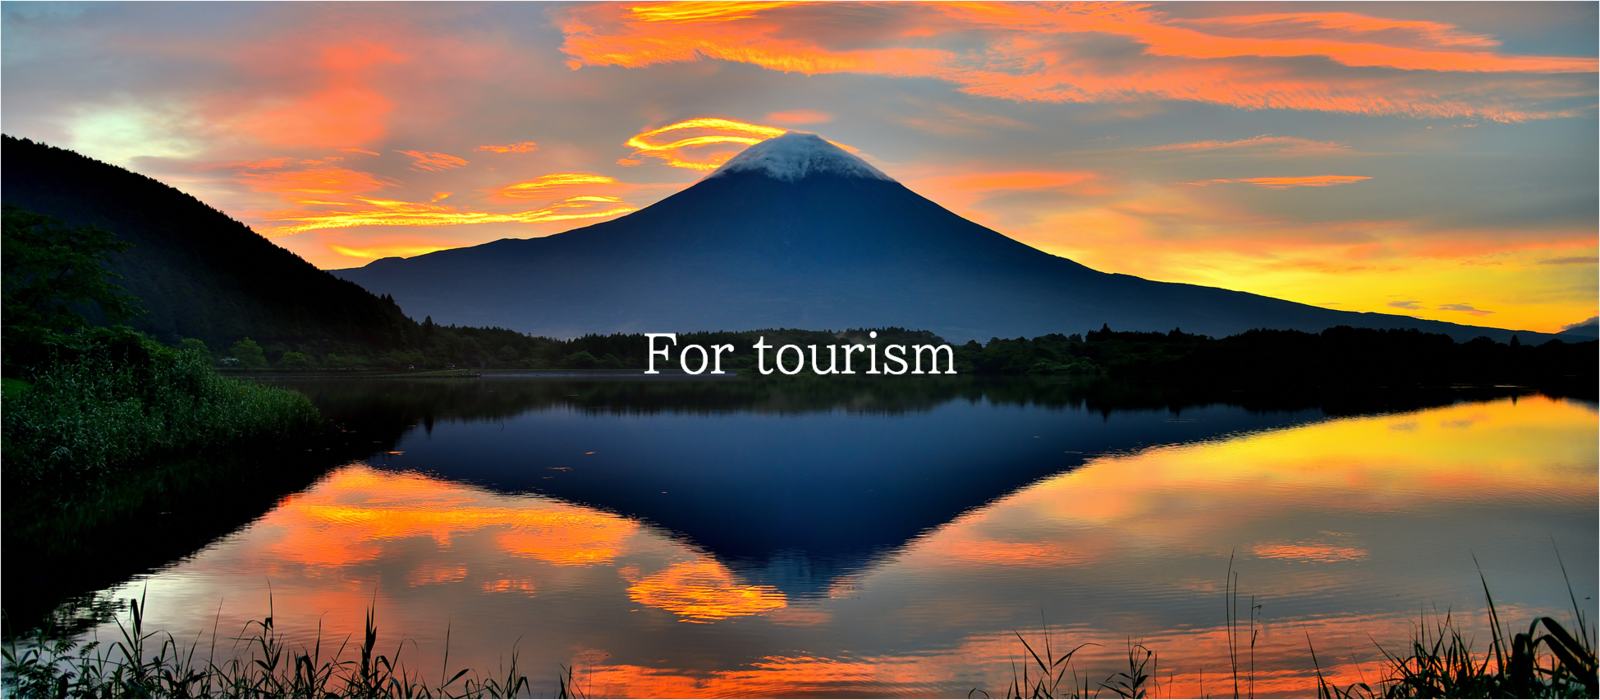 For tourism